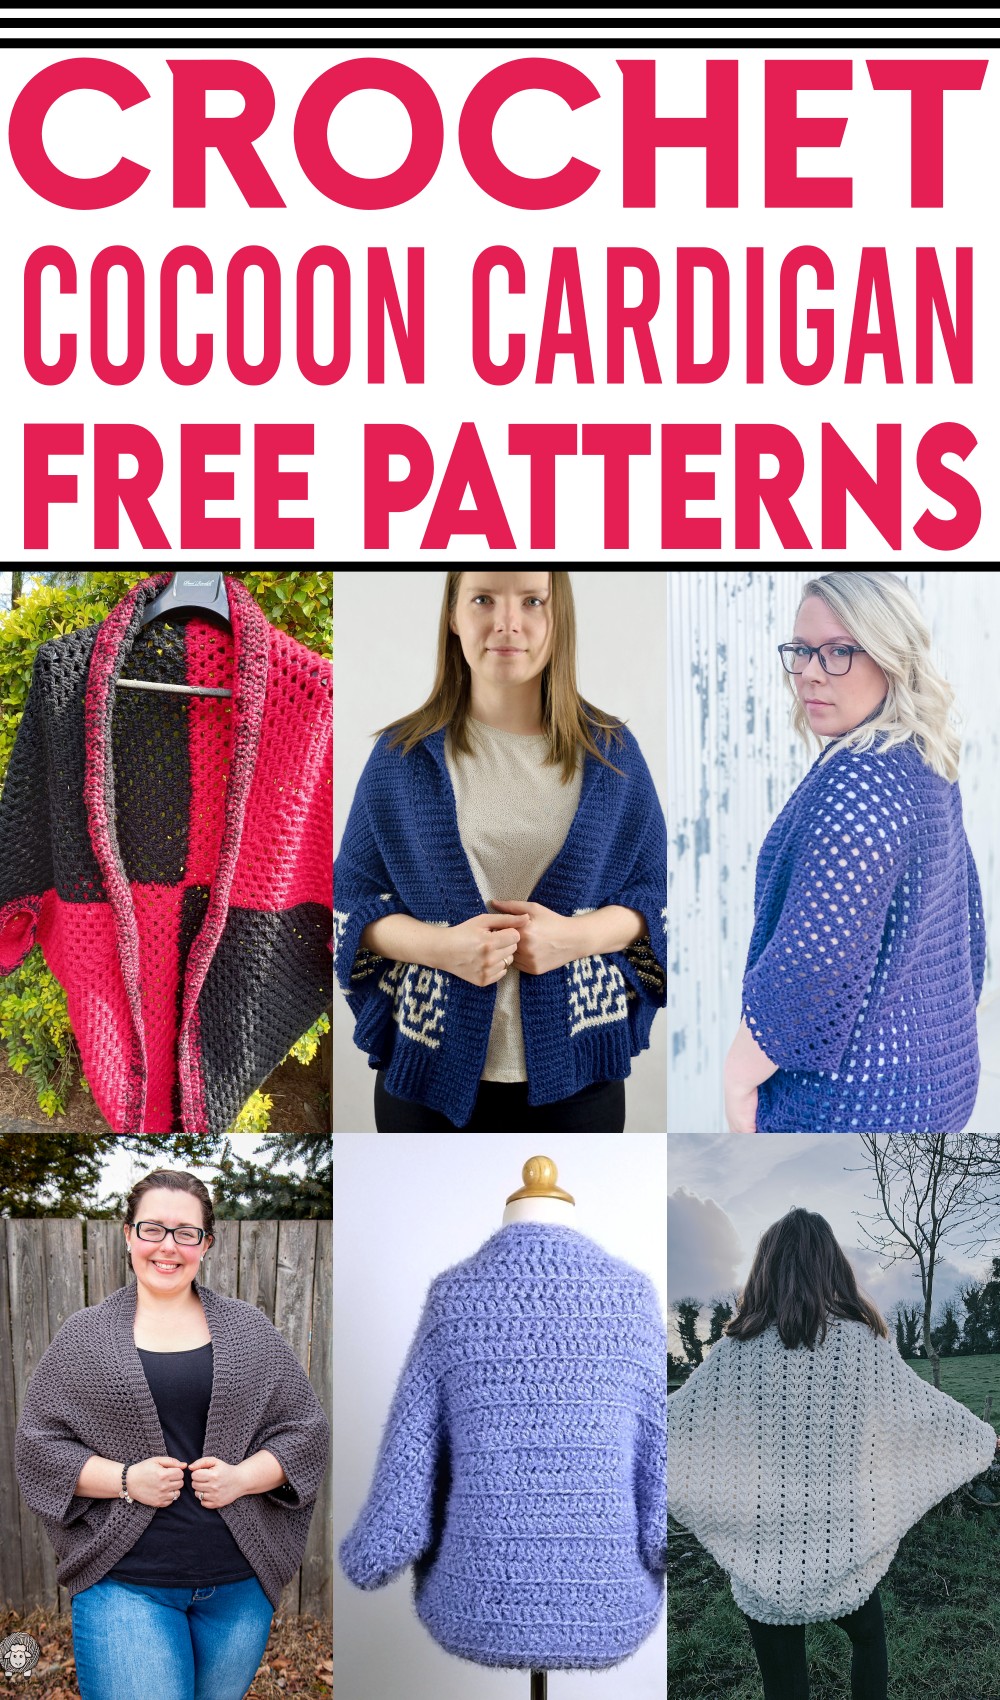 Free Crochet Cocoon Cardigan Patterns